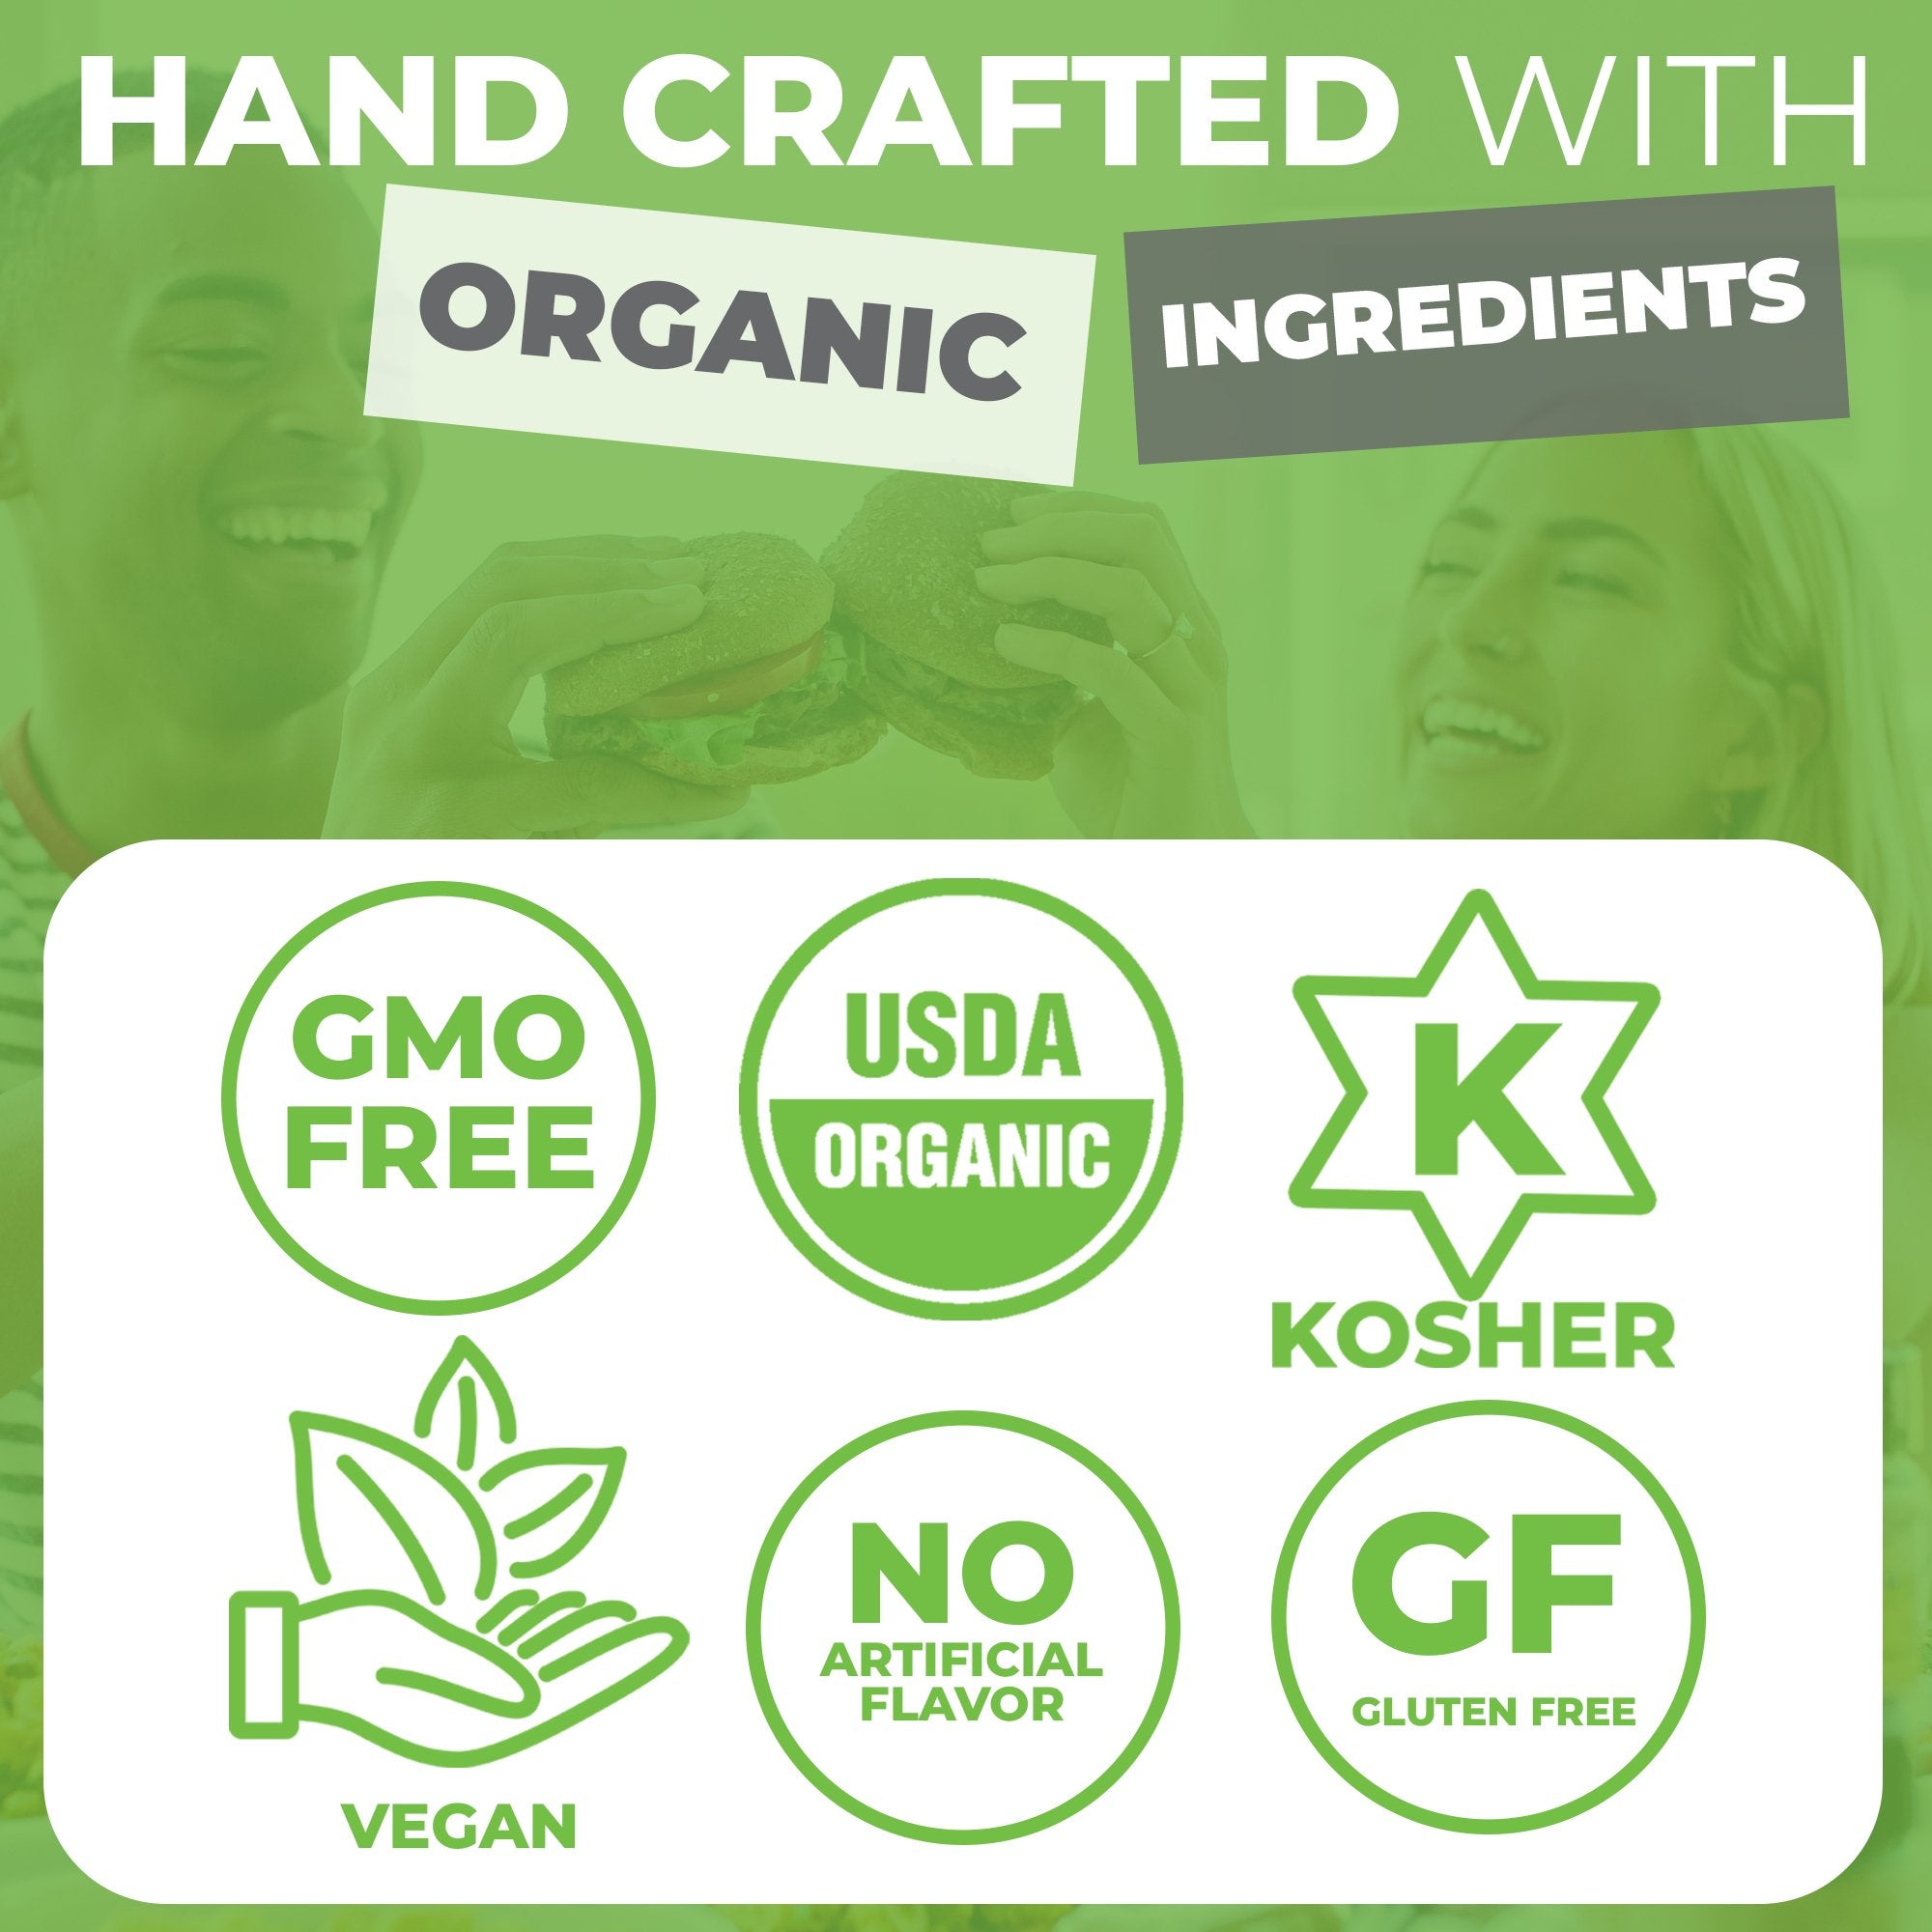 FreshJax Oregano is GMO-Free, USDA Organic, Kosher, Vegan and Gluten-Free